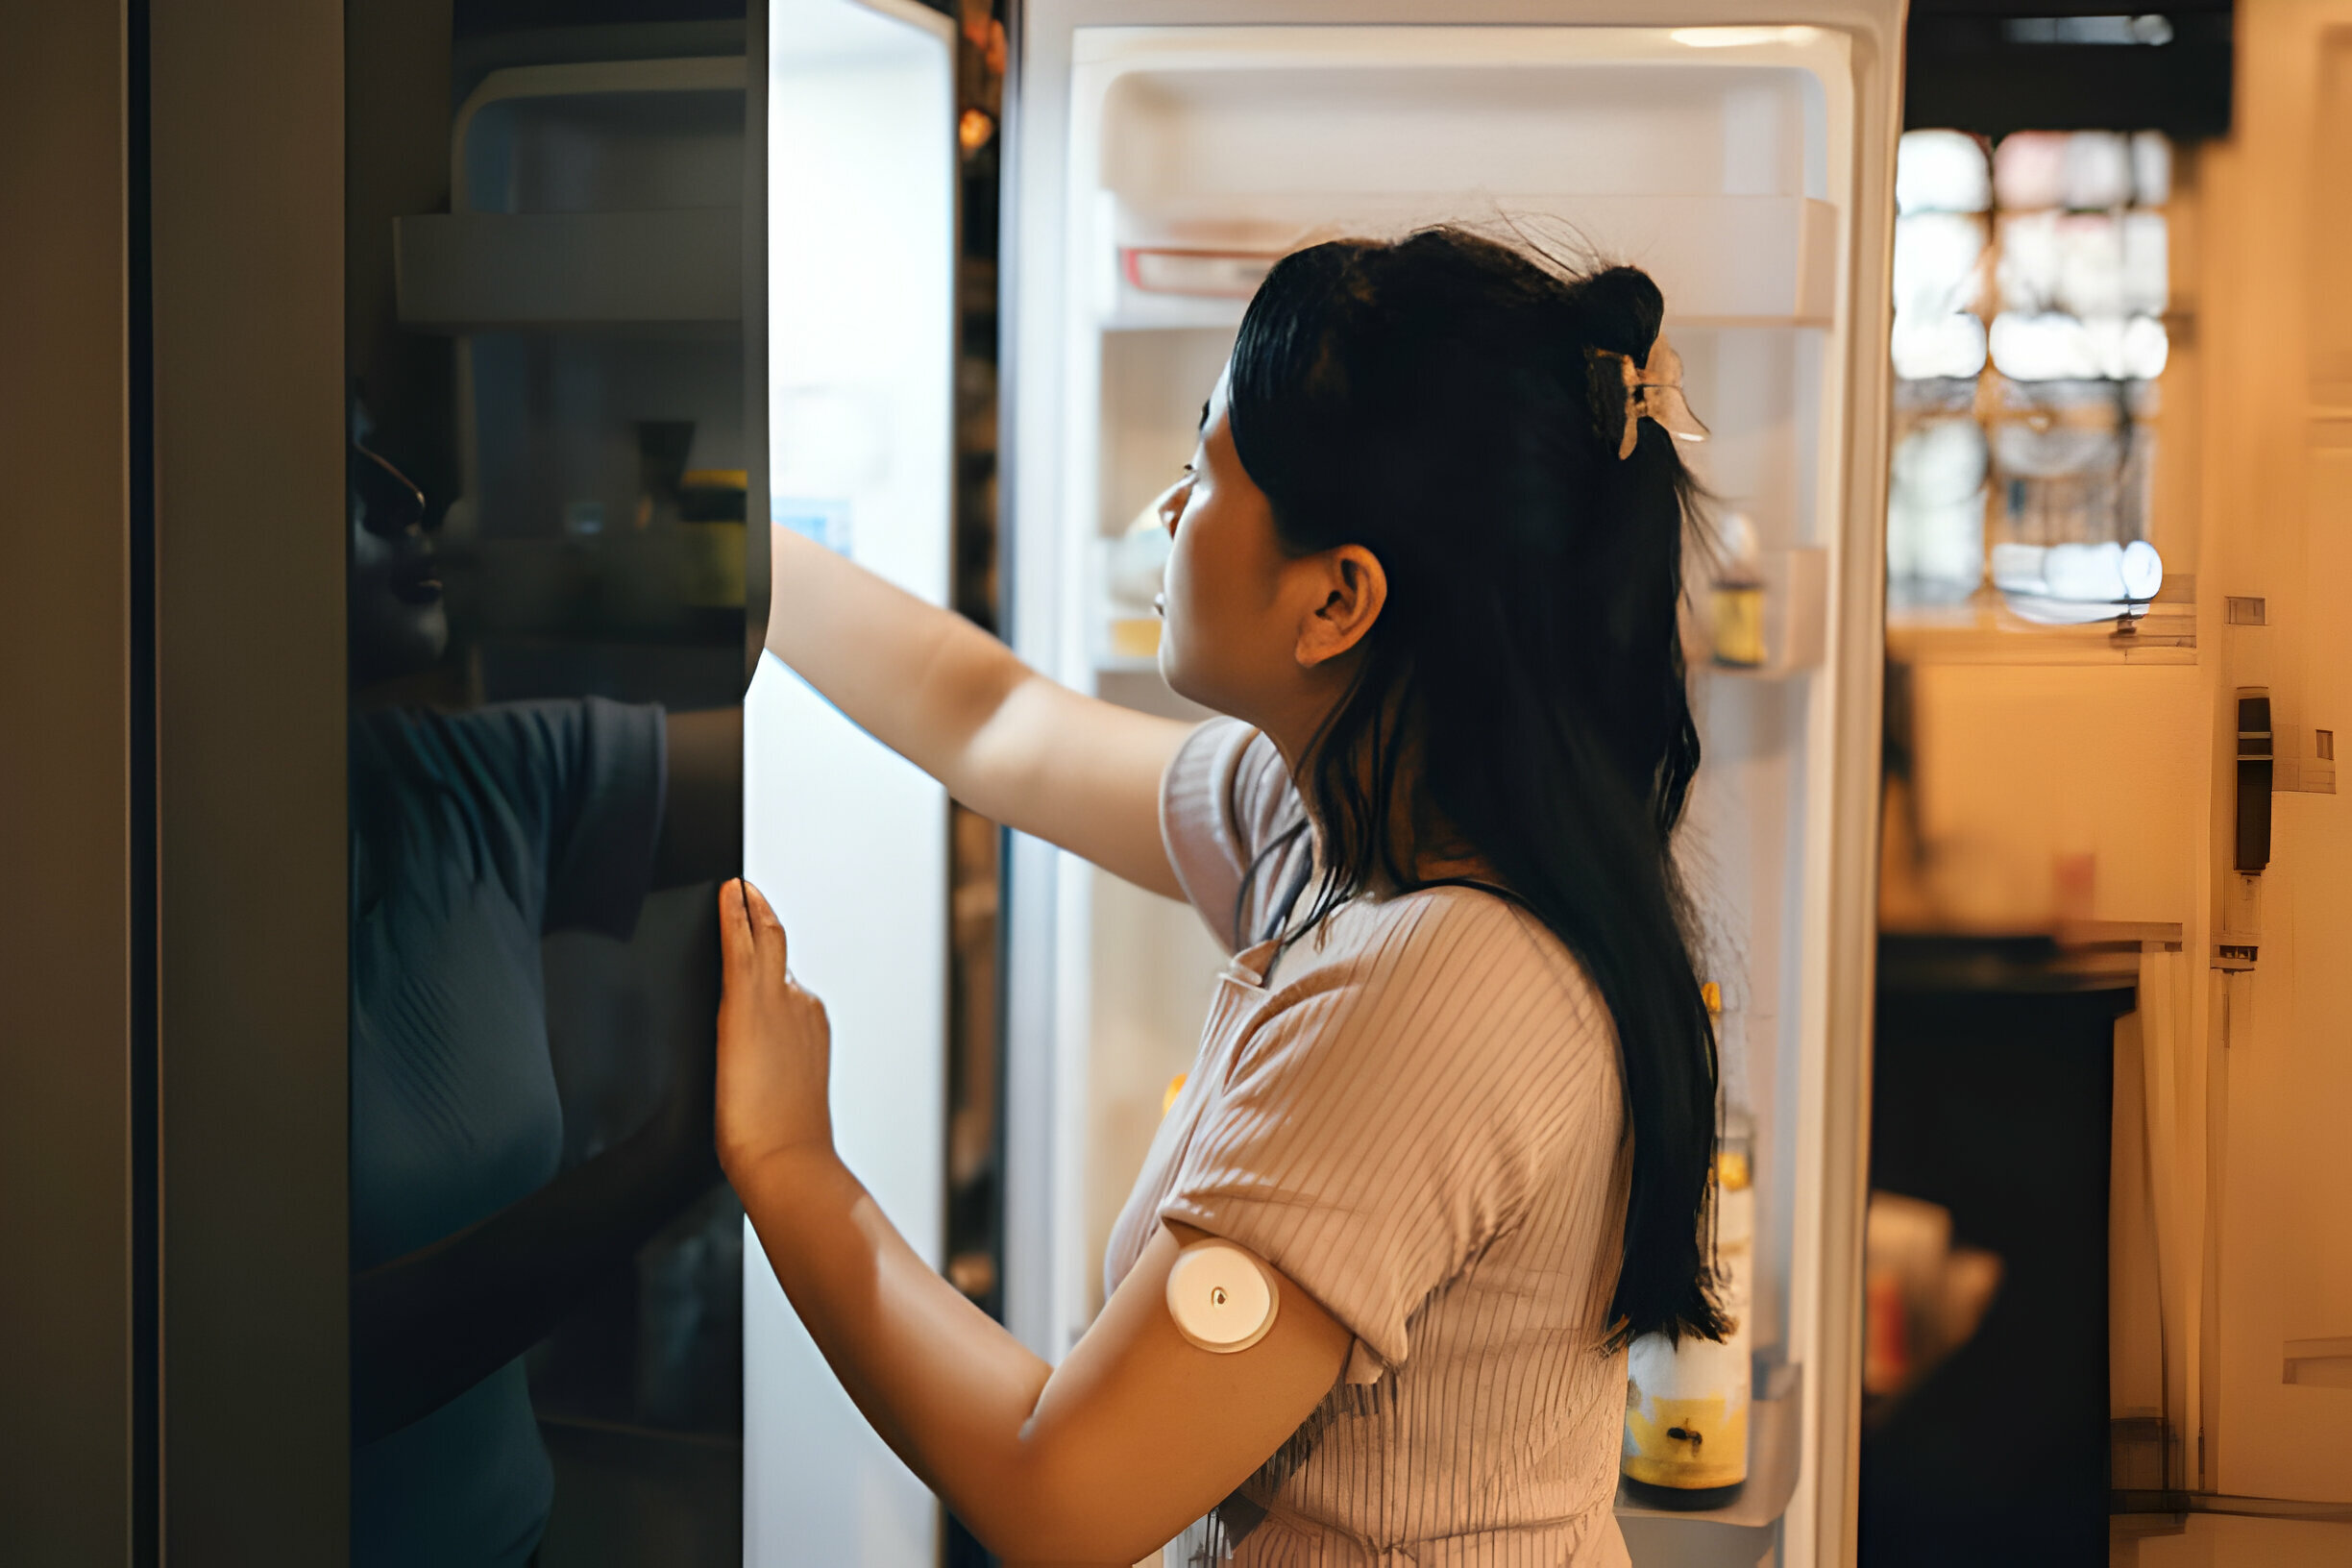 Smart Fridges, Smart Care: Tips for Maintaining Modern Refrigerators